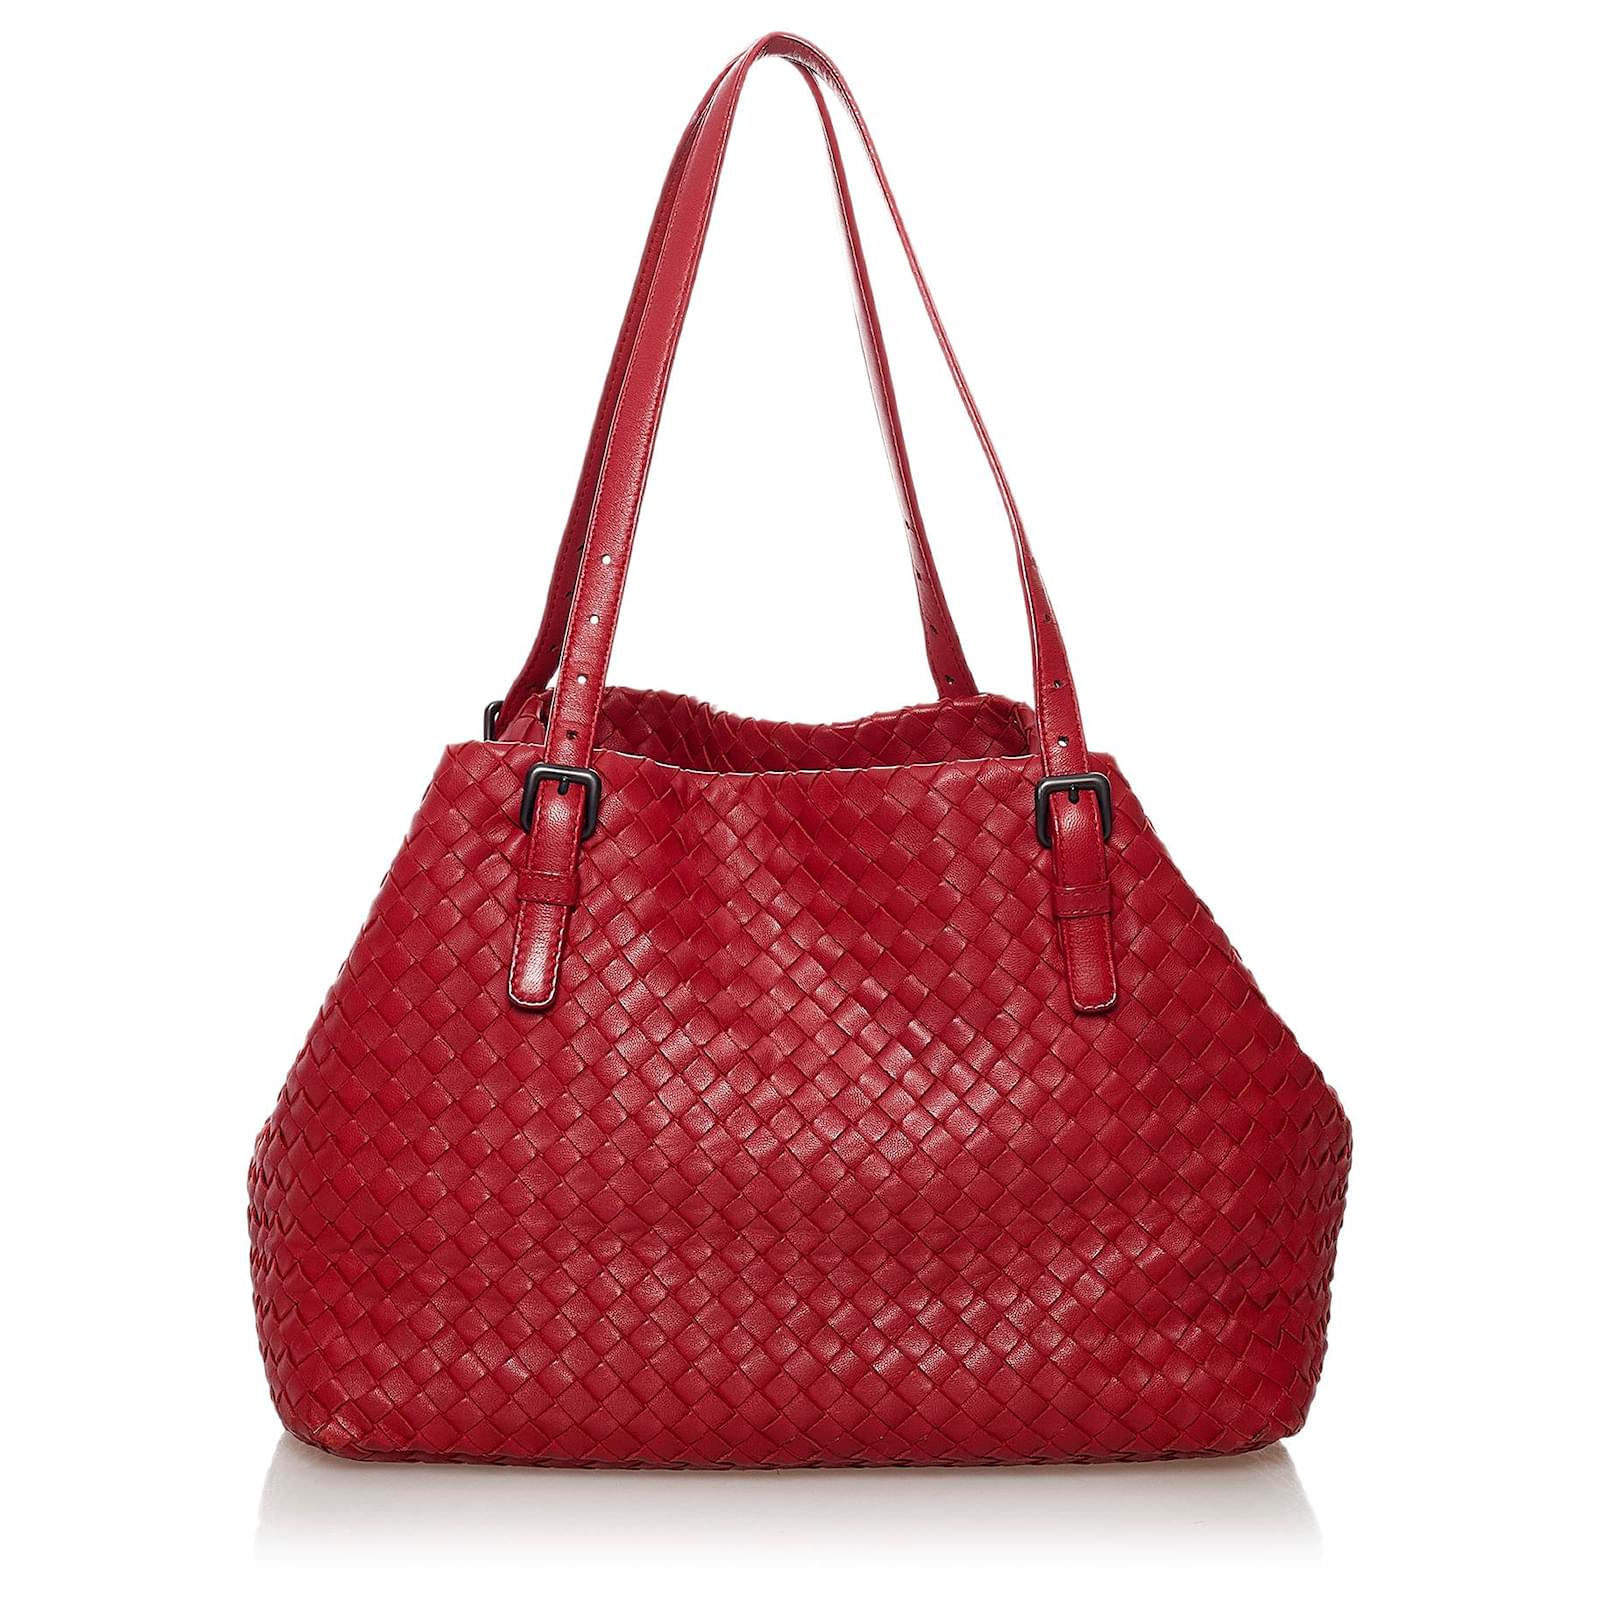 Bottega Veneta Intrecciato Tote Bag - Red - Woman - Calfskin